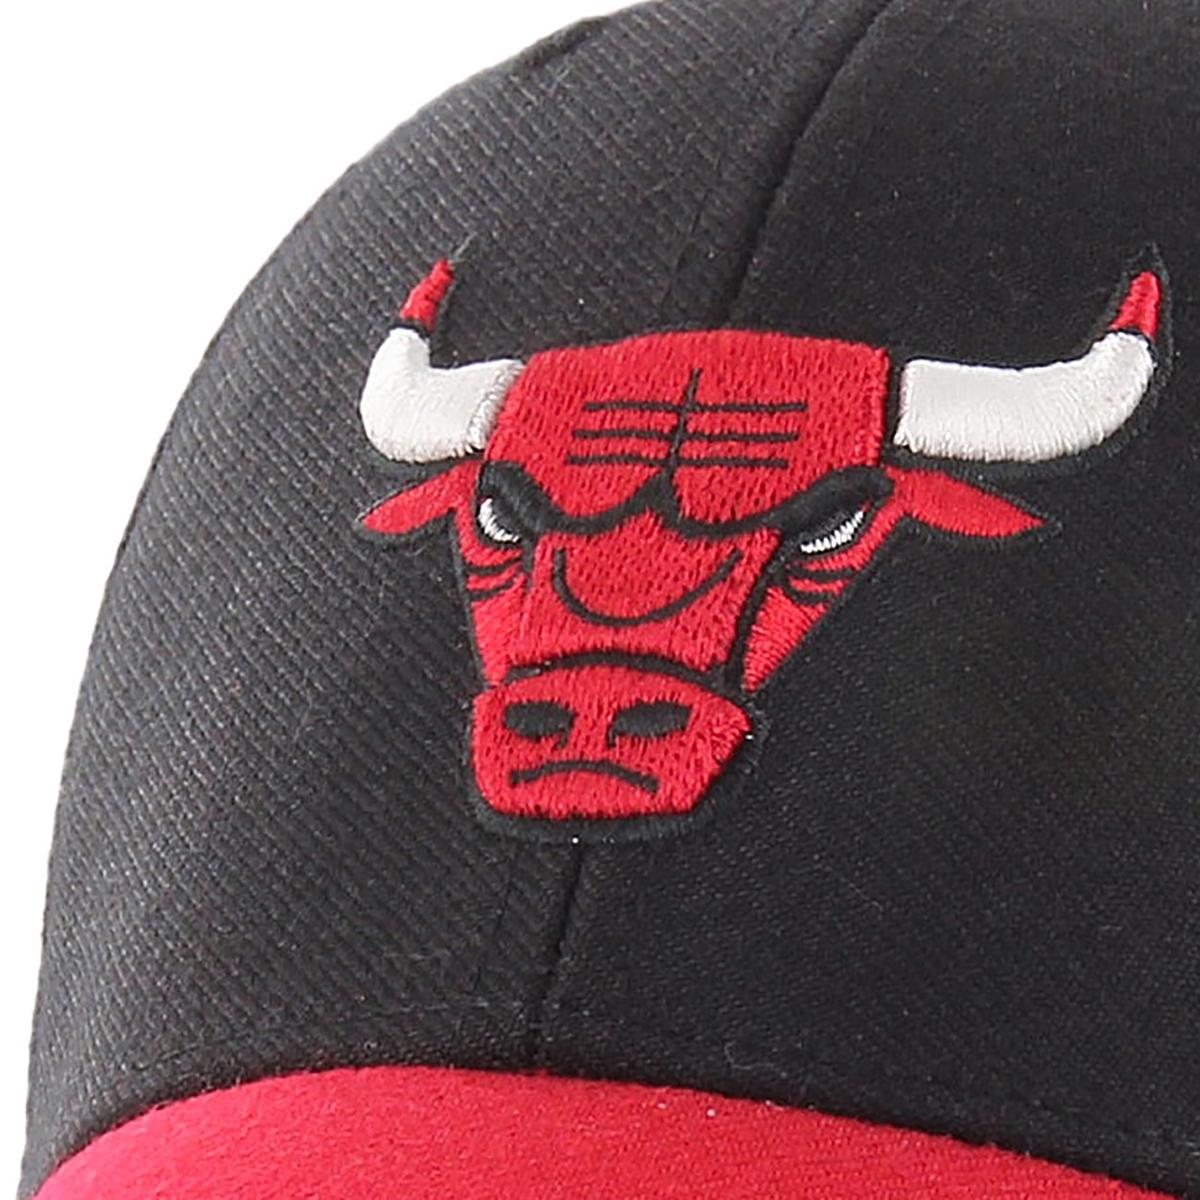 Gorra NBA Chicago Bulls Curva 47 Brand